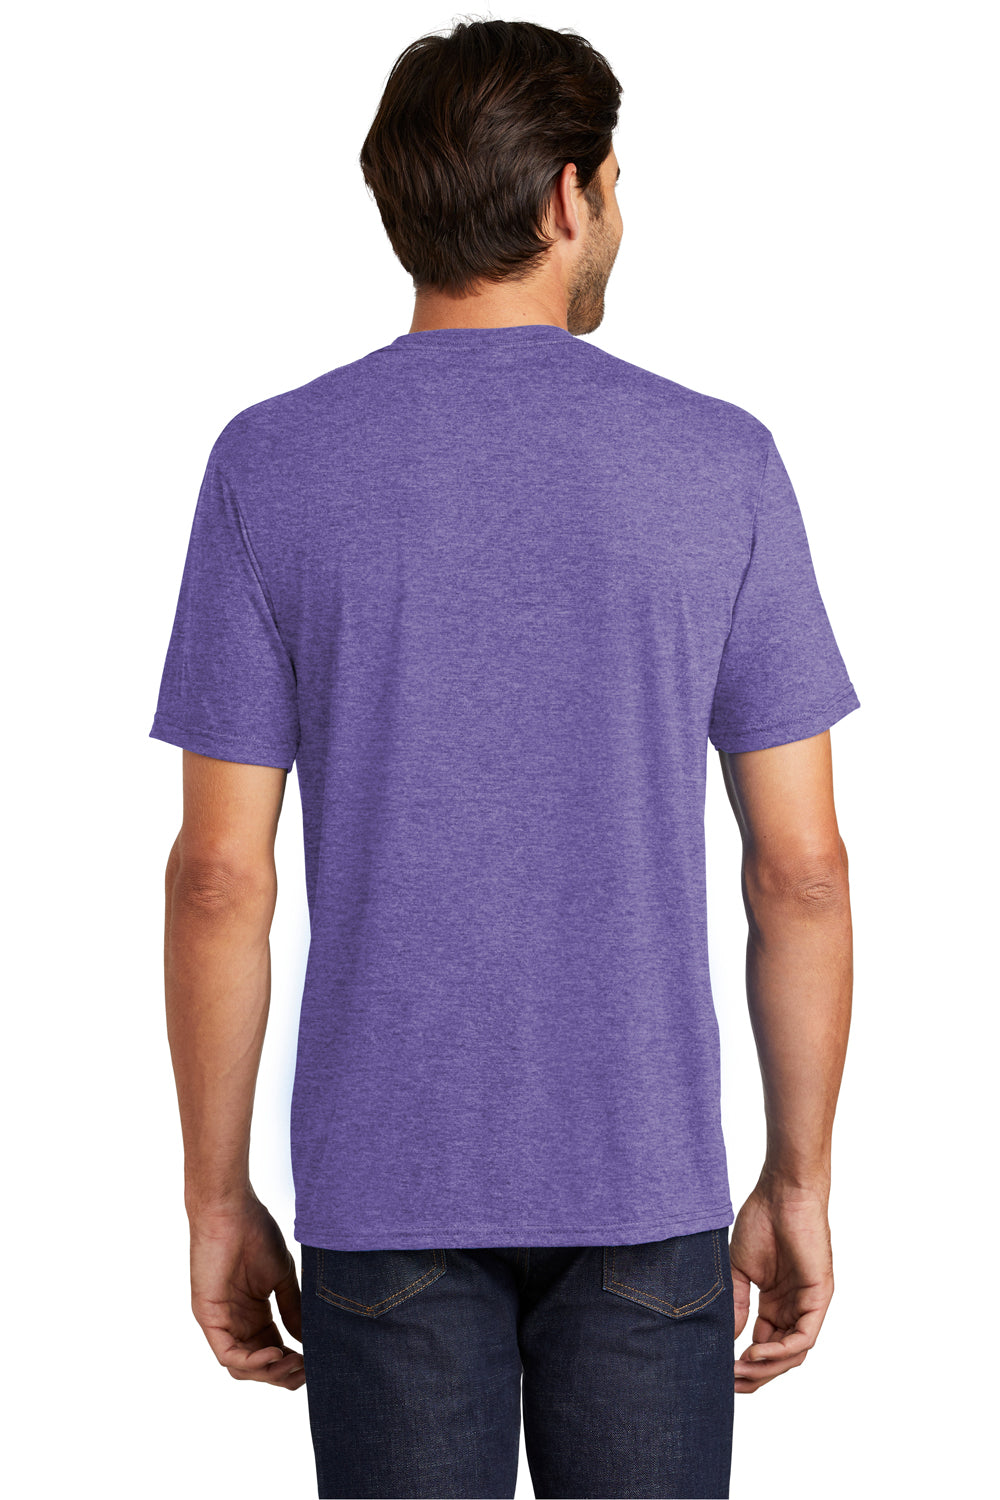 District DM130 Mens Perfect Tri Short Sleeve Crewneck T-Shirt Purple Frost Back